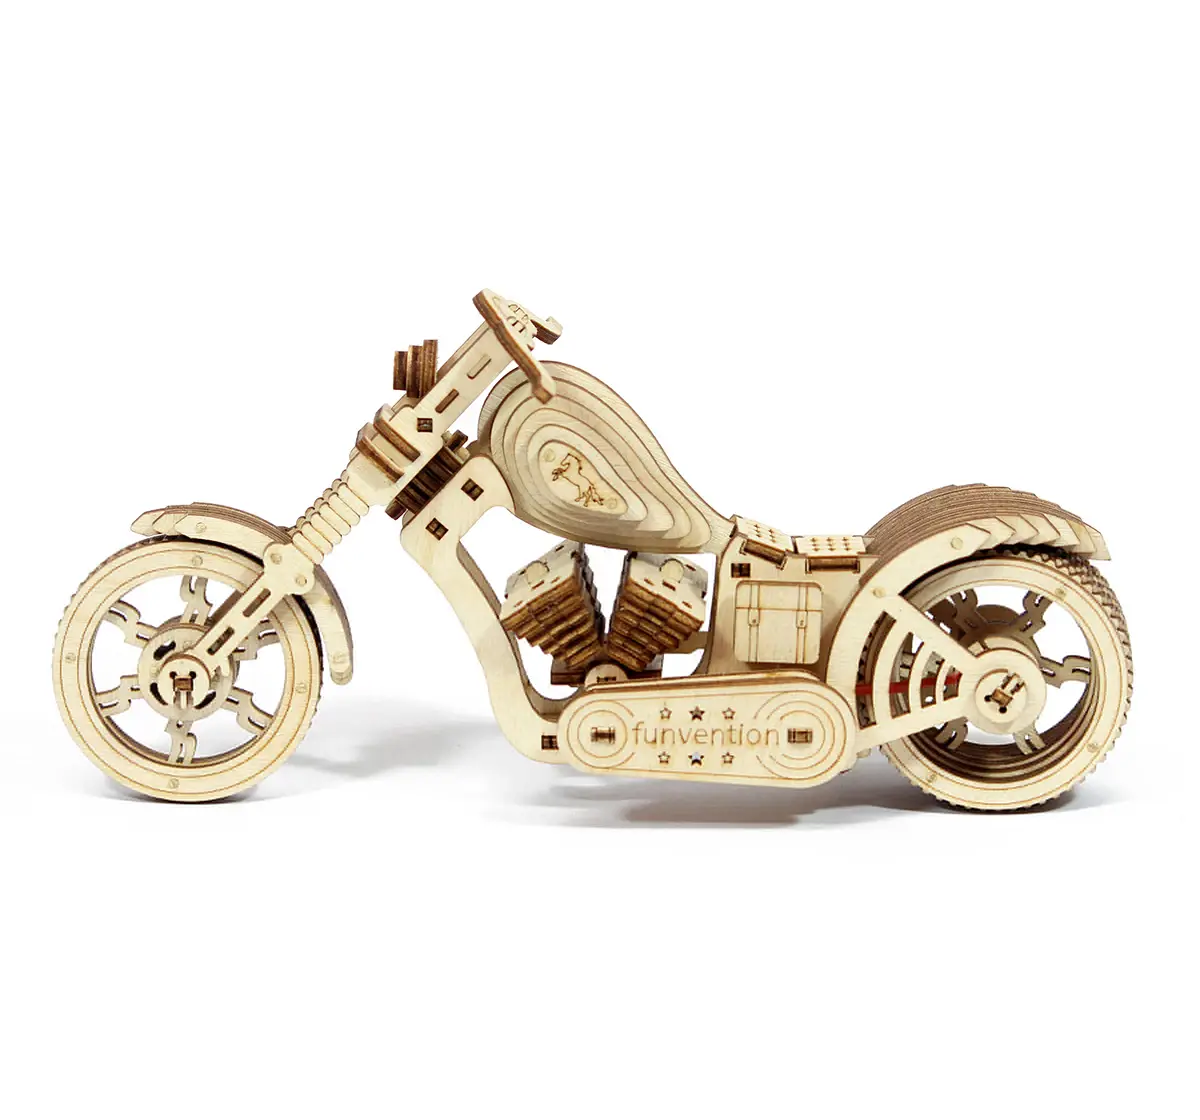 Funvention Cruiser Bike - Diy Mechanical Model Stem for Kids Age 8Y+